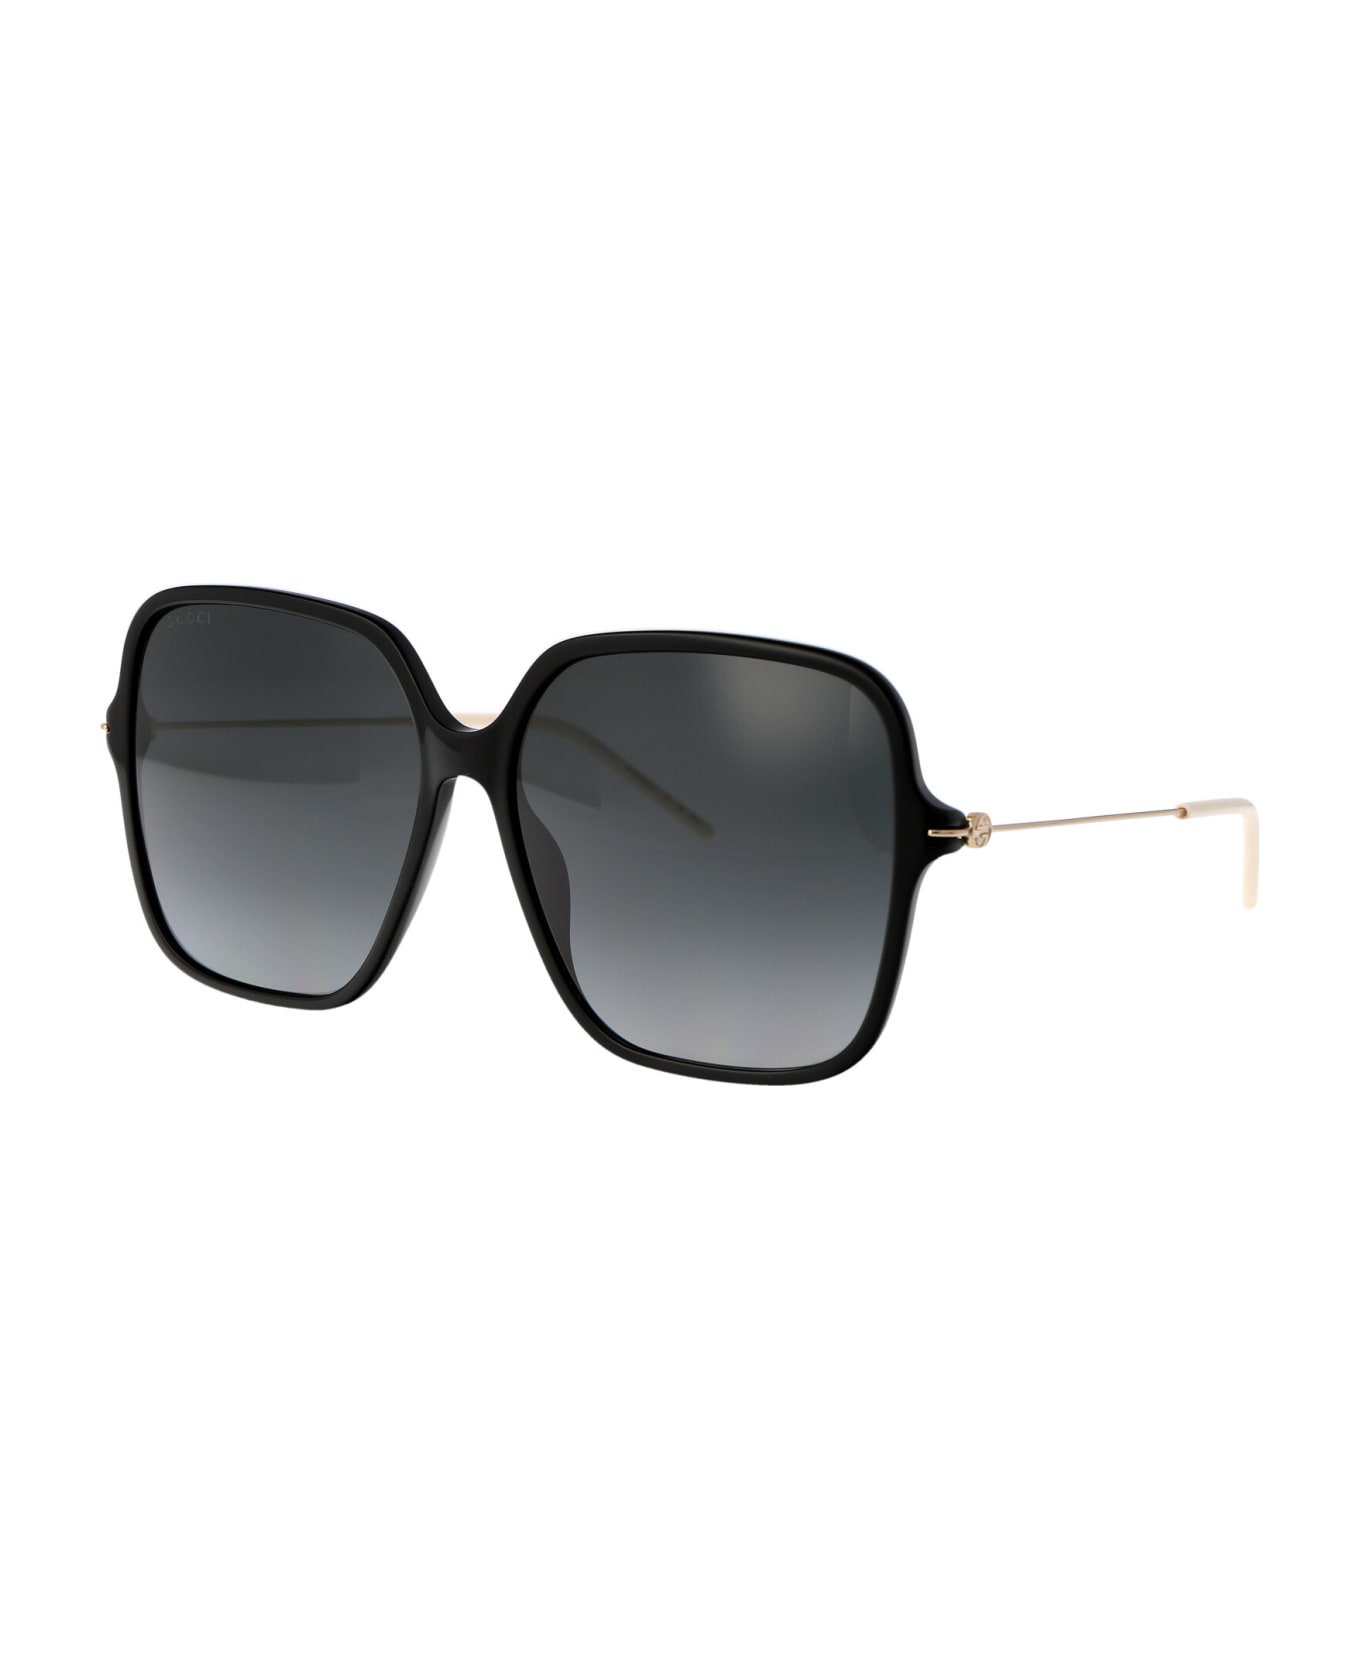 Gucci Eyewear Gg1267s Sunglasses - 001 BLACK GOLD GREY サングラス